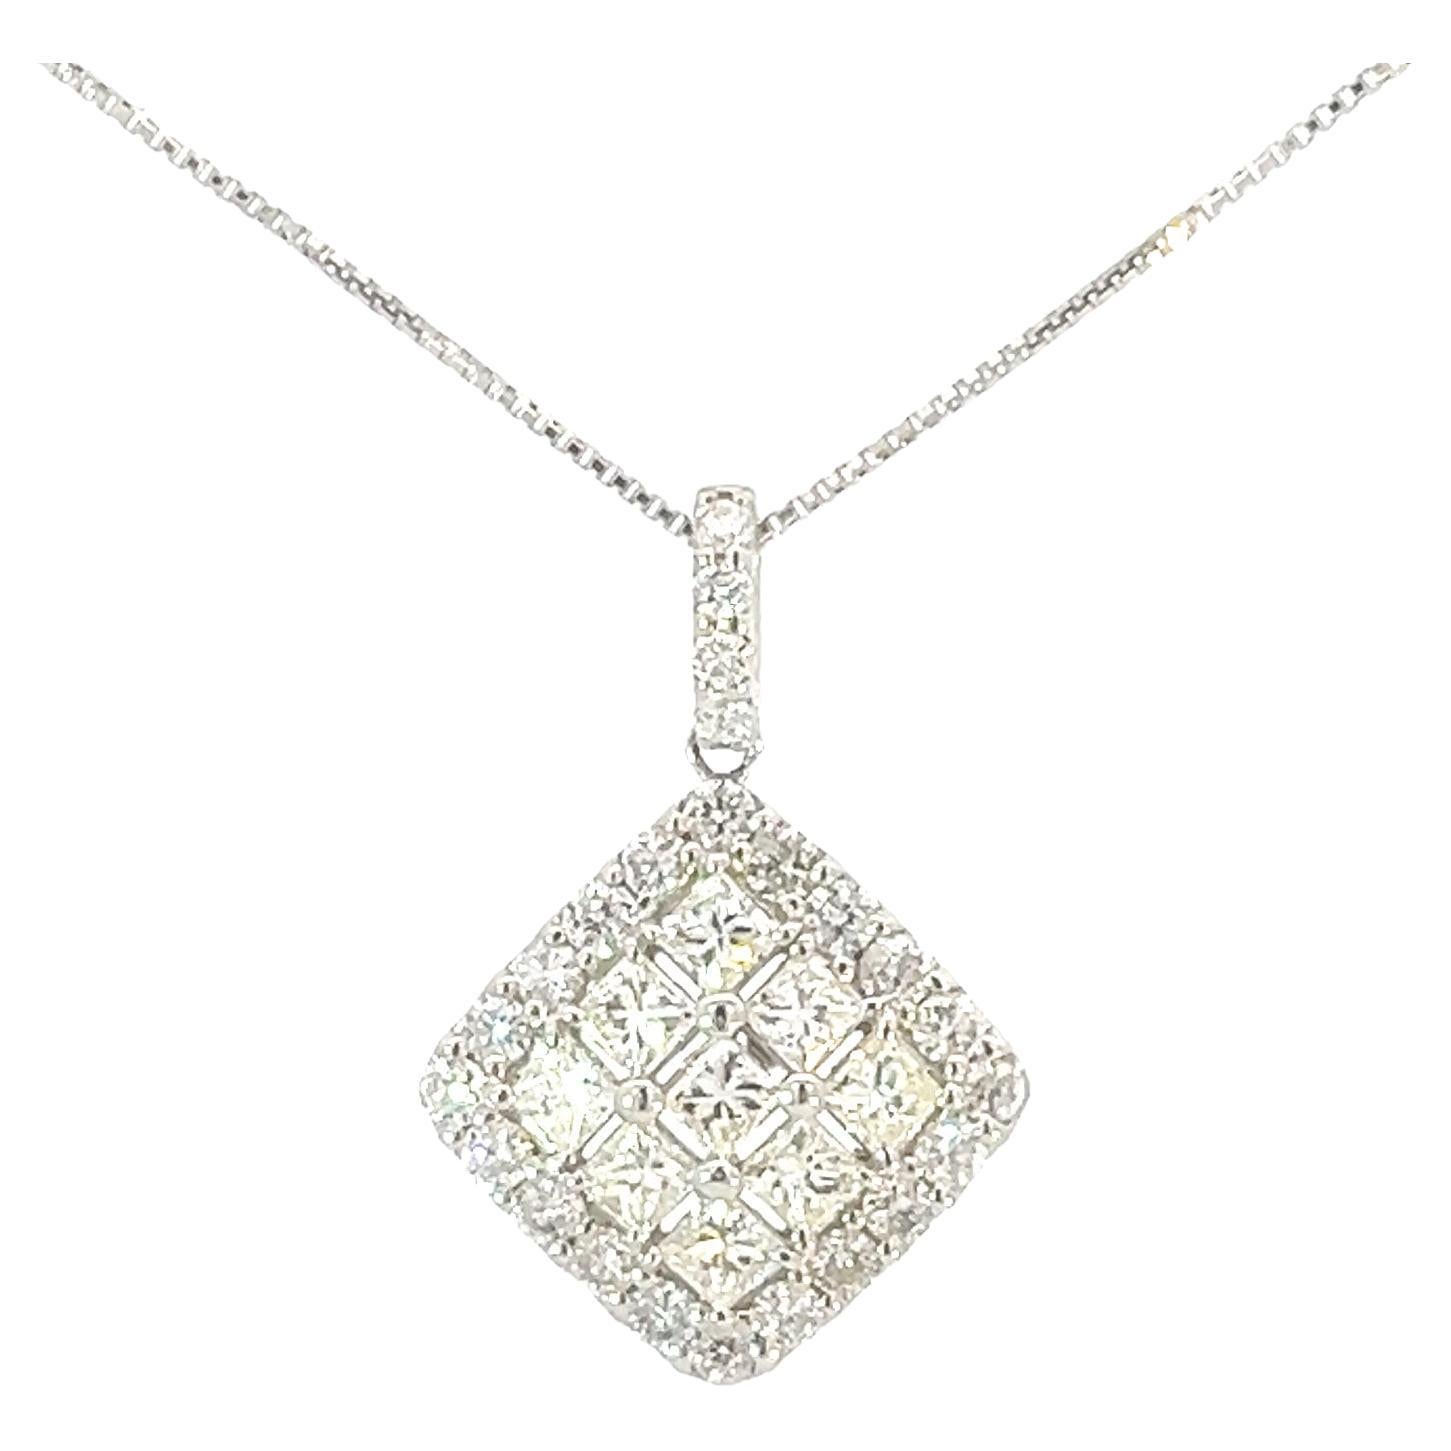 White Platinum Classic 1 Crt Radiant Diamond Pendant W/ Adjustable Necklace 